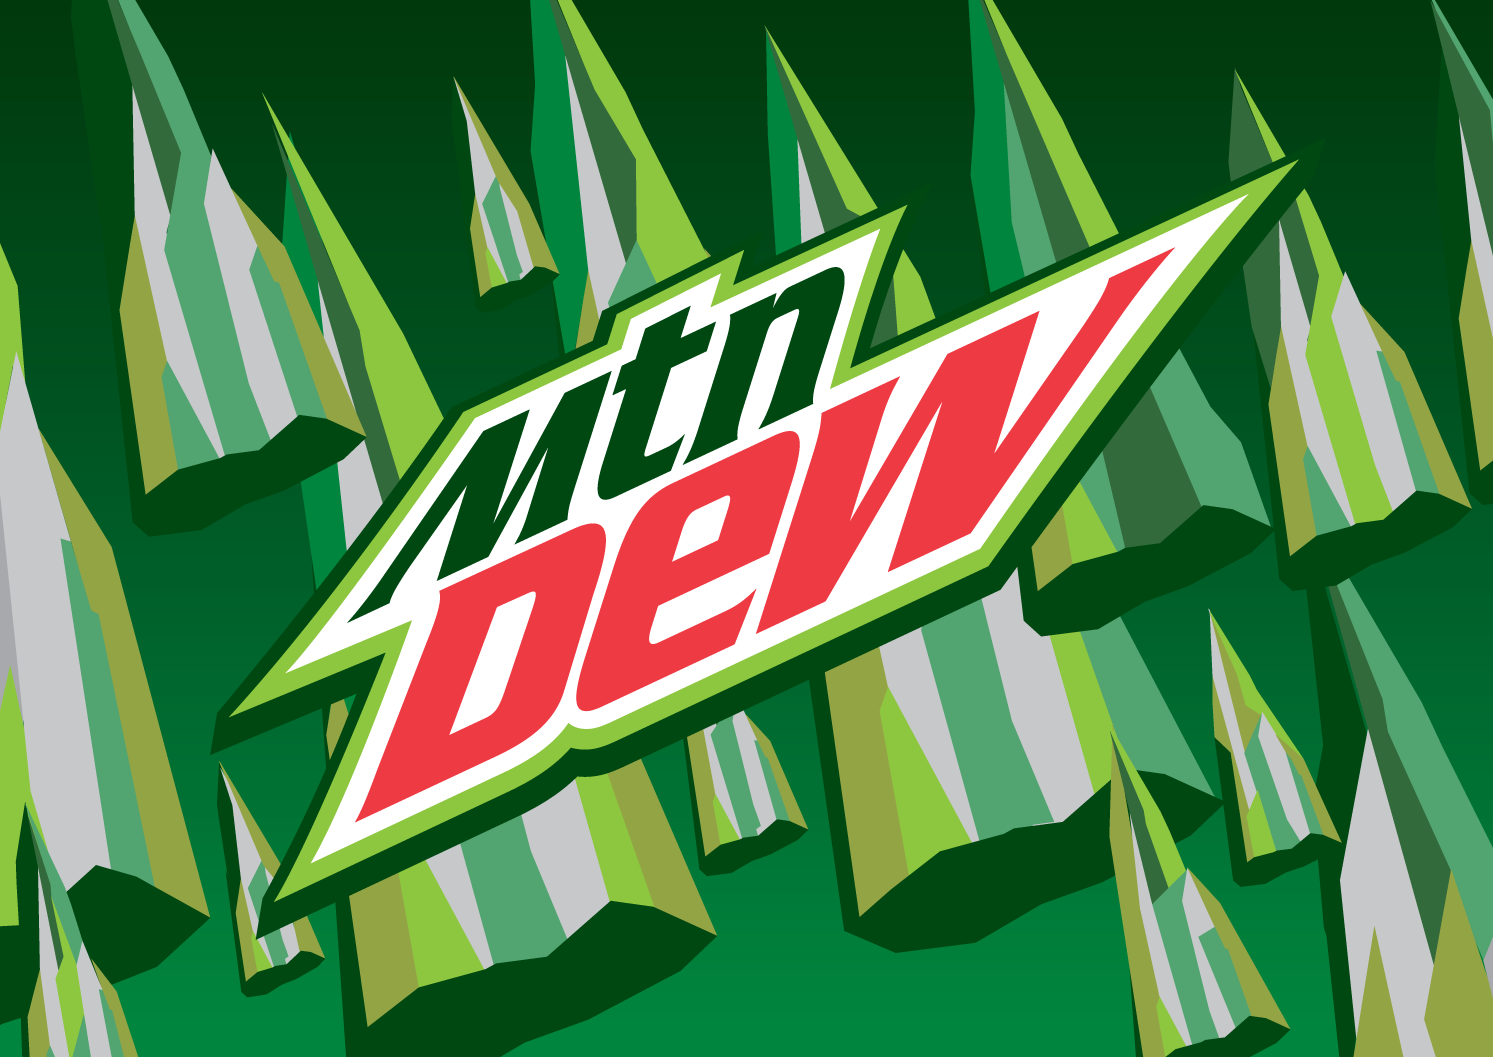 green mountain dew logo